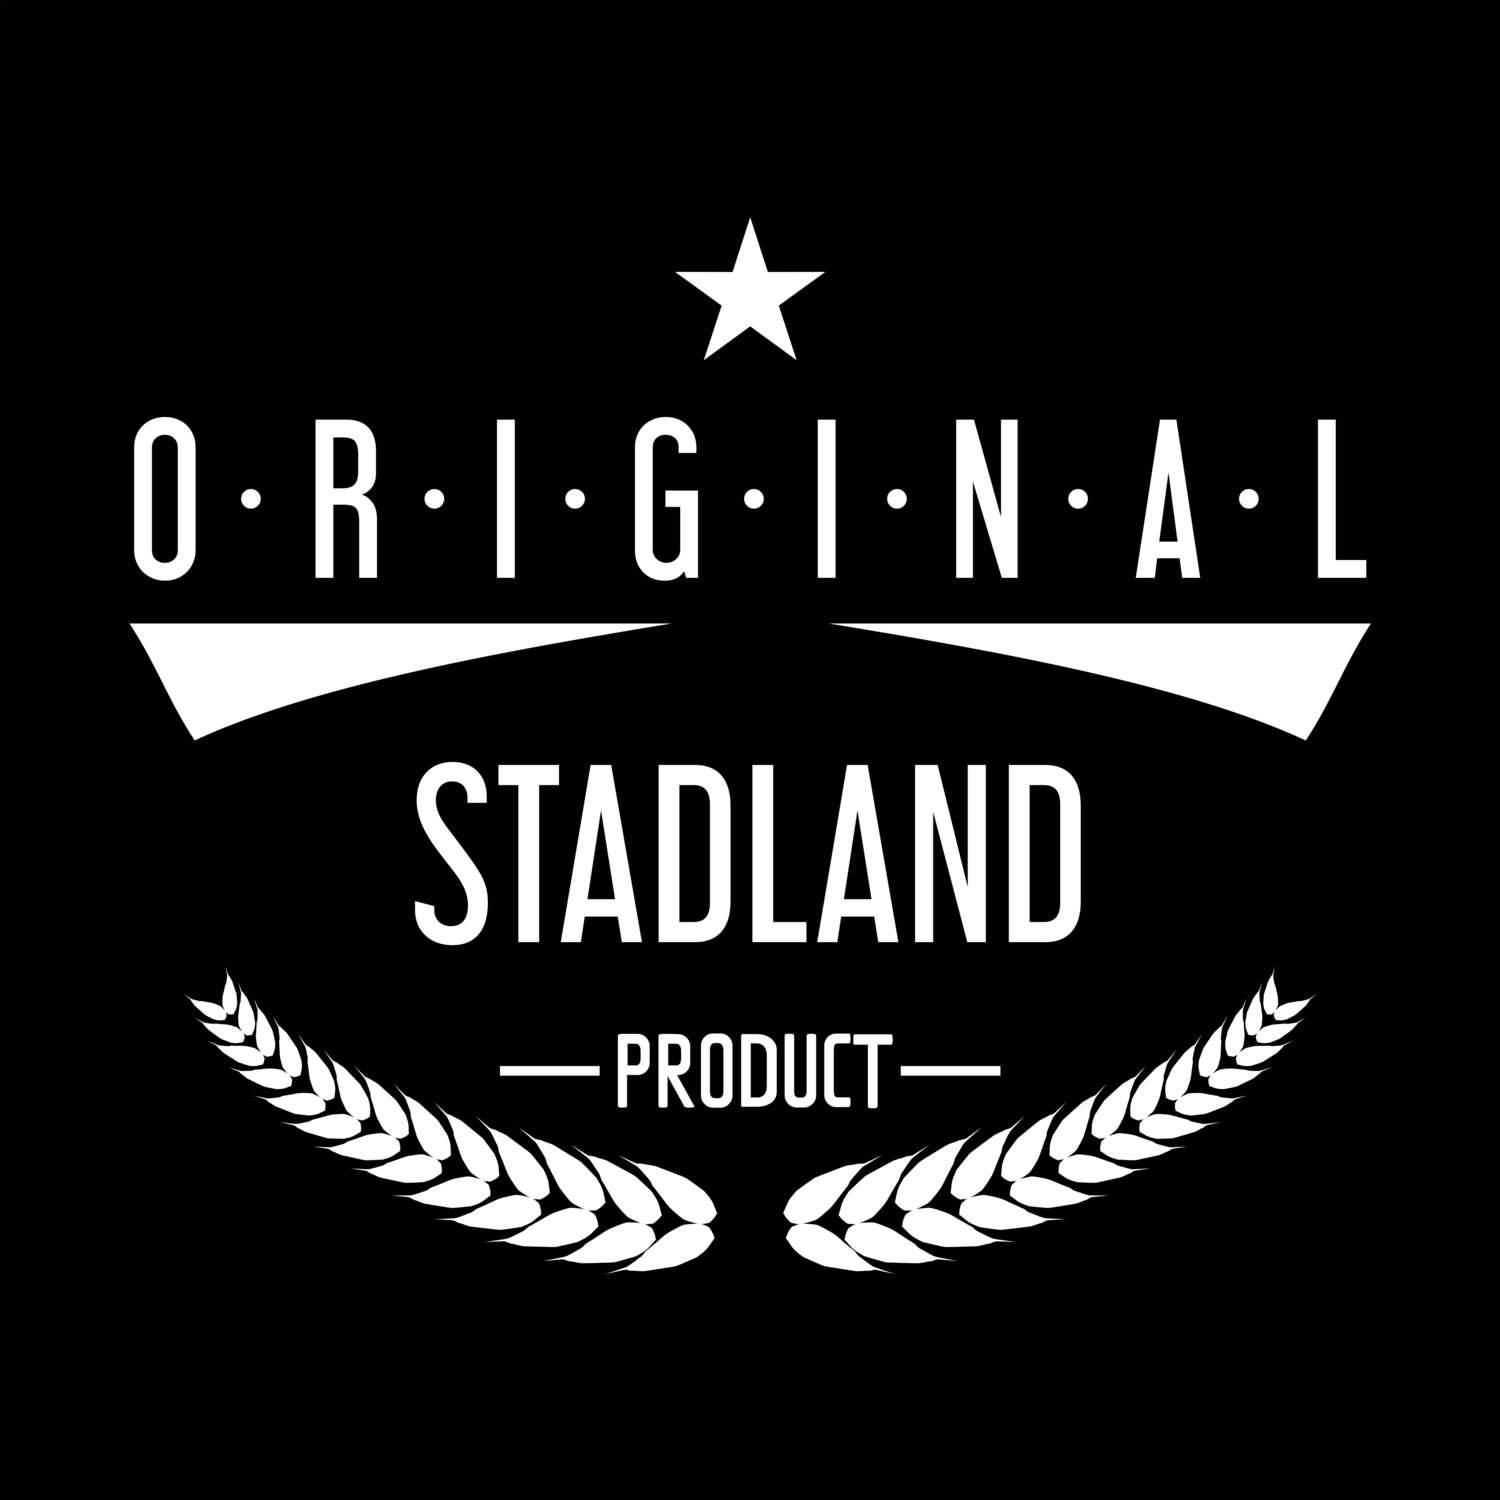 Stadland T-Shirt »Original Product«